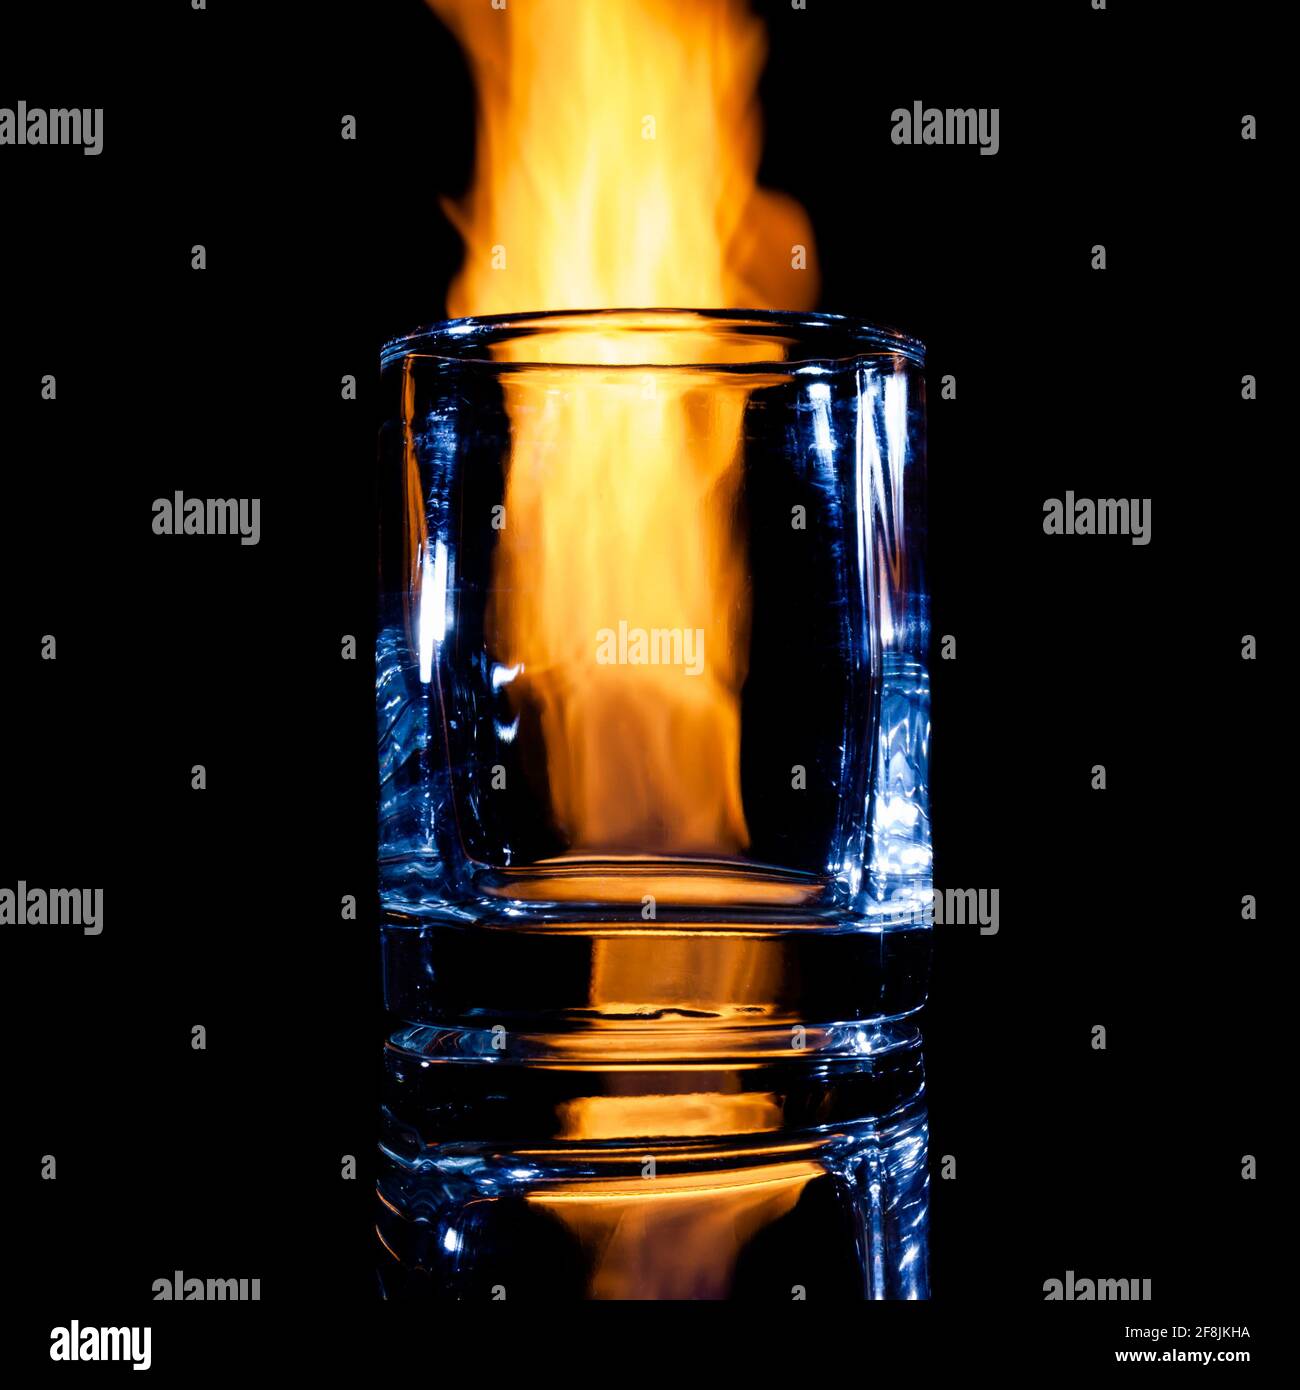 burning glass on a black background, isolate Stock Photo